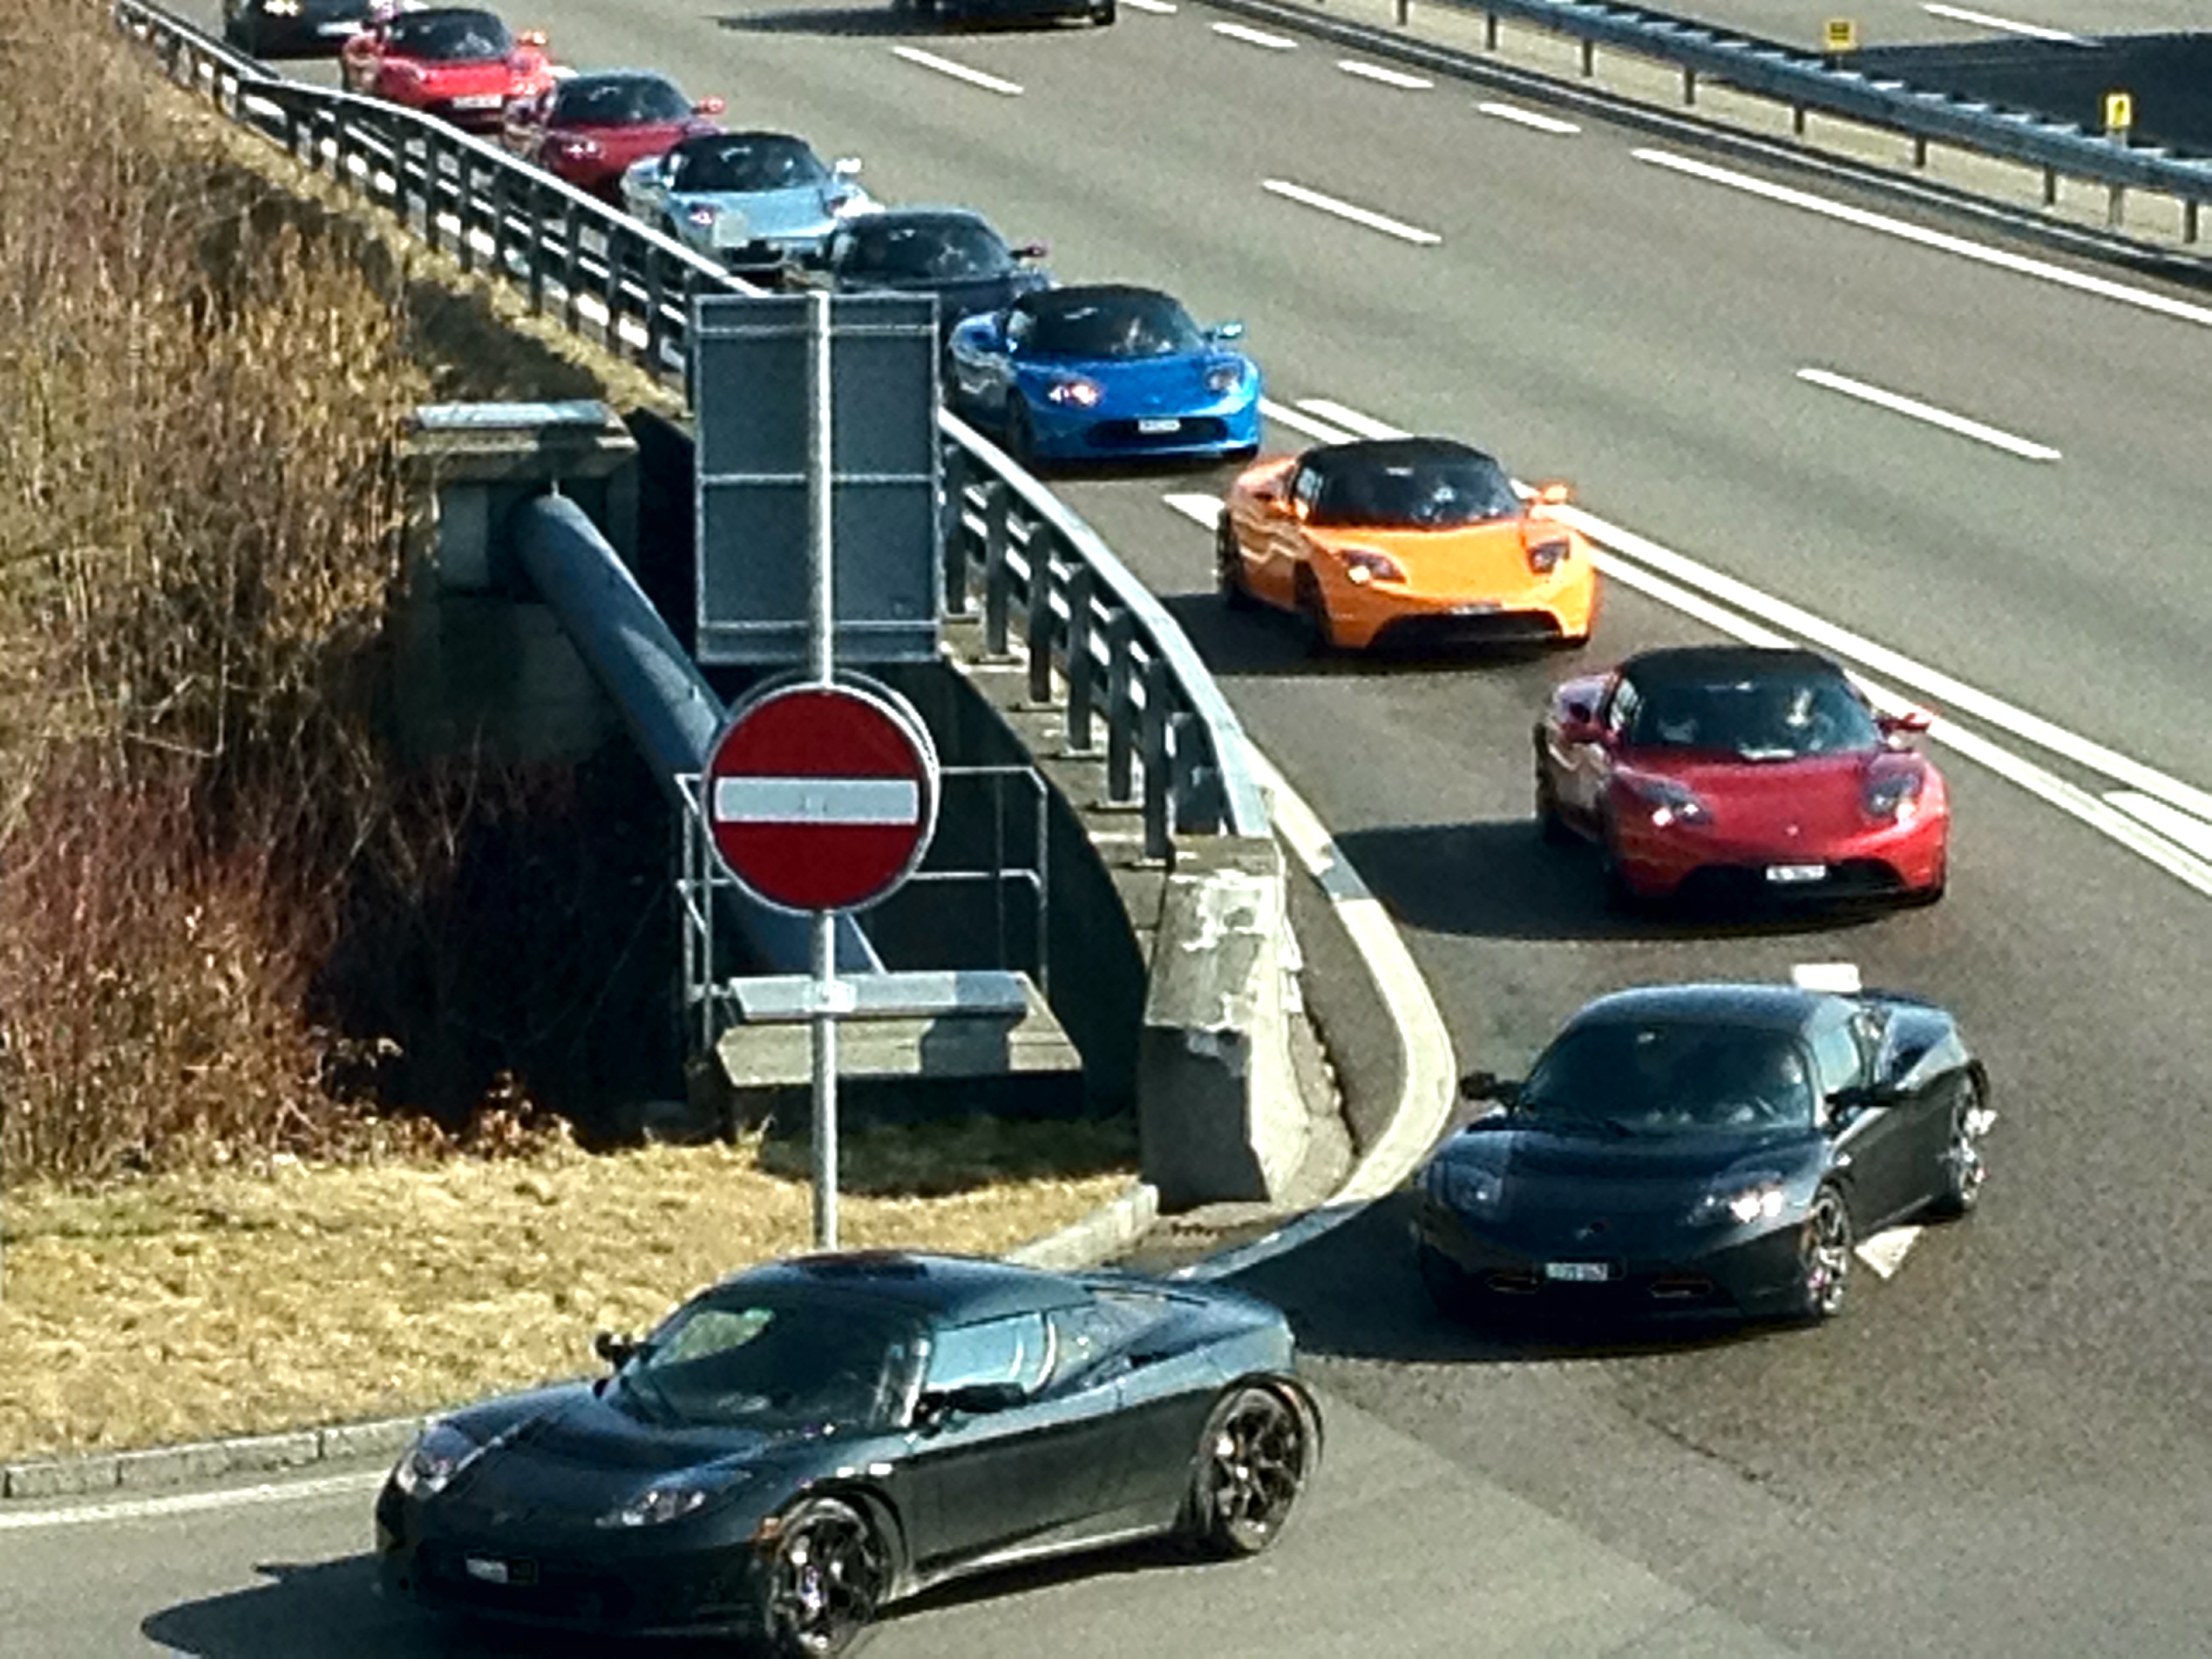 09.03.12: Teslatour zum Autosalon in Genf